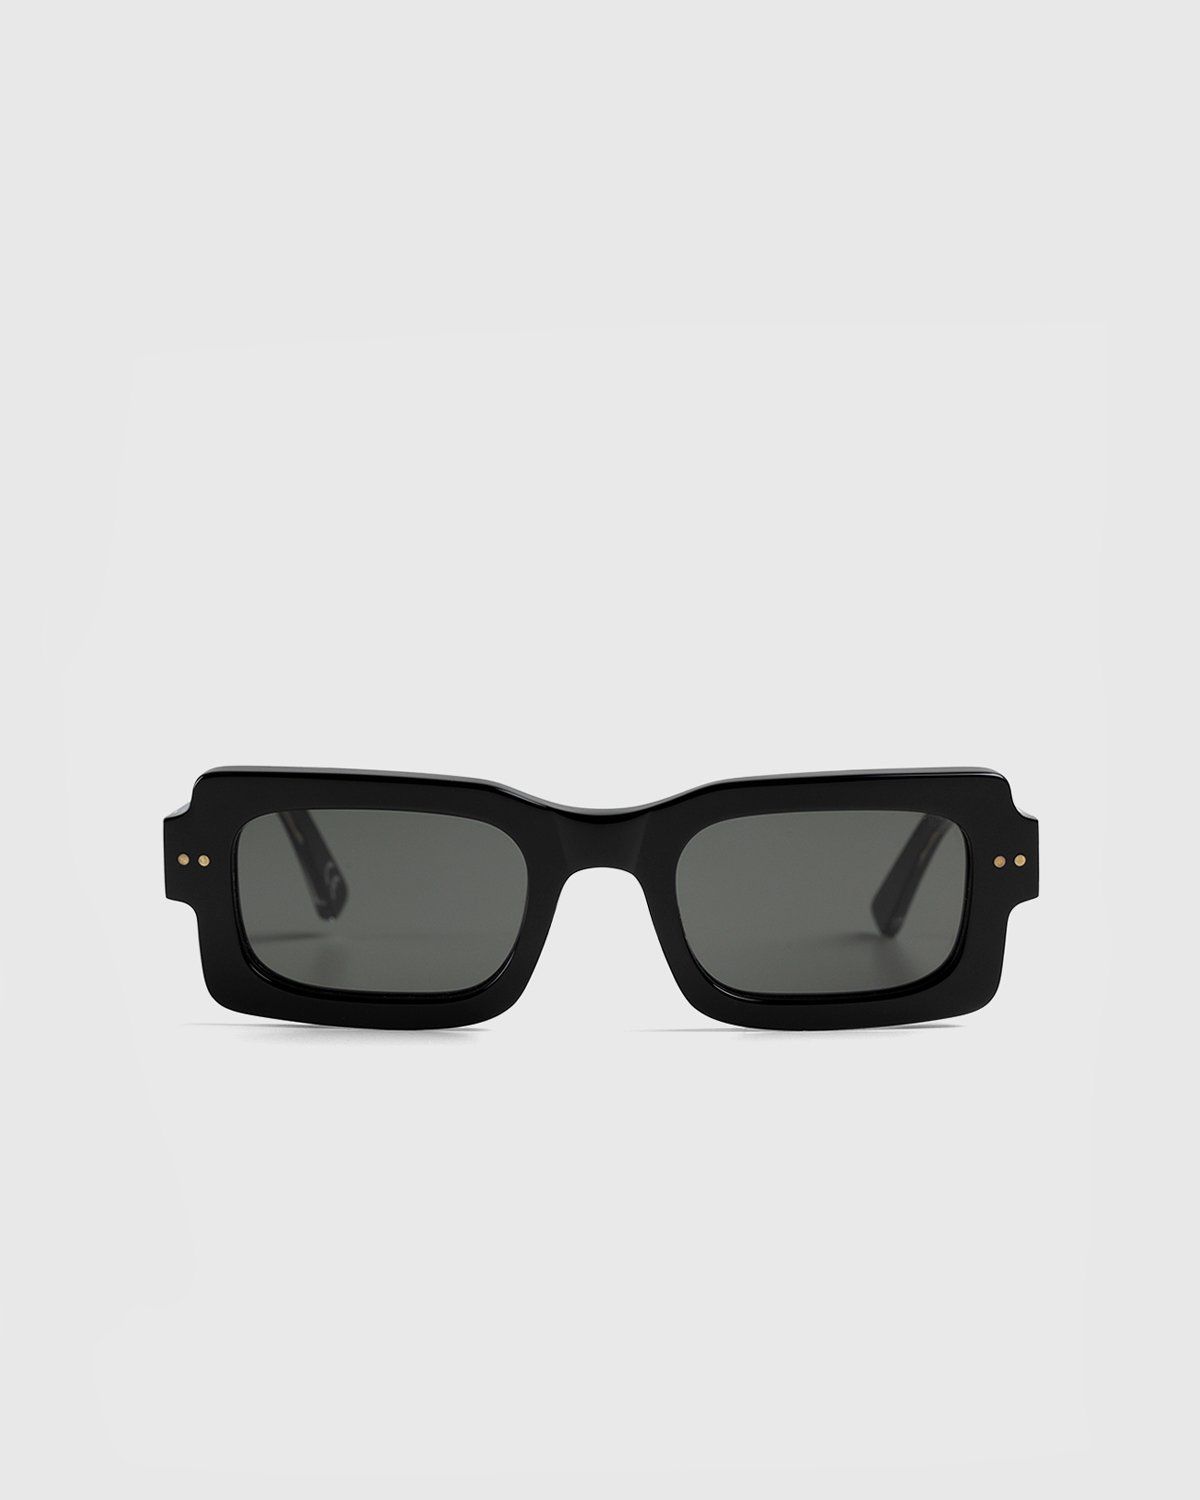 Marni – Lake Vostok Sunglasses Black - Sunglasses - Black - Image 1